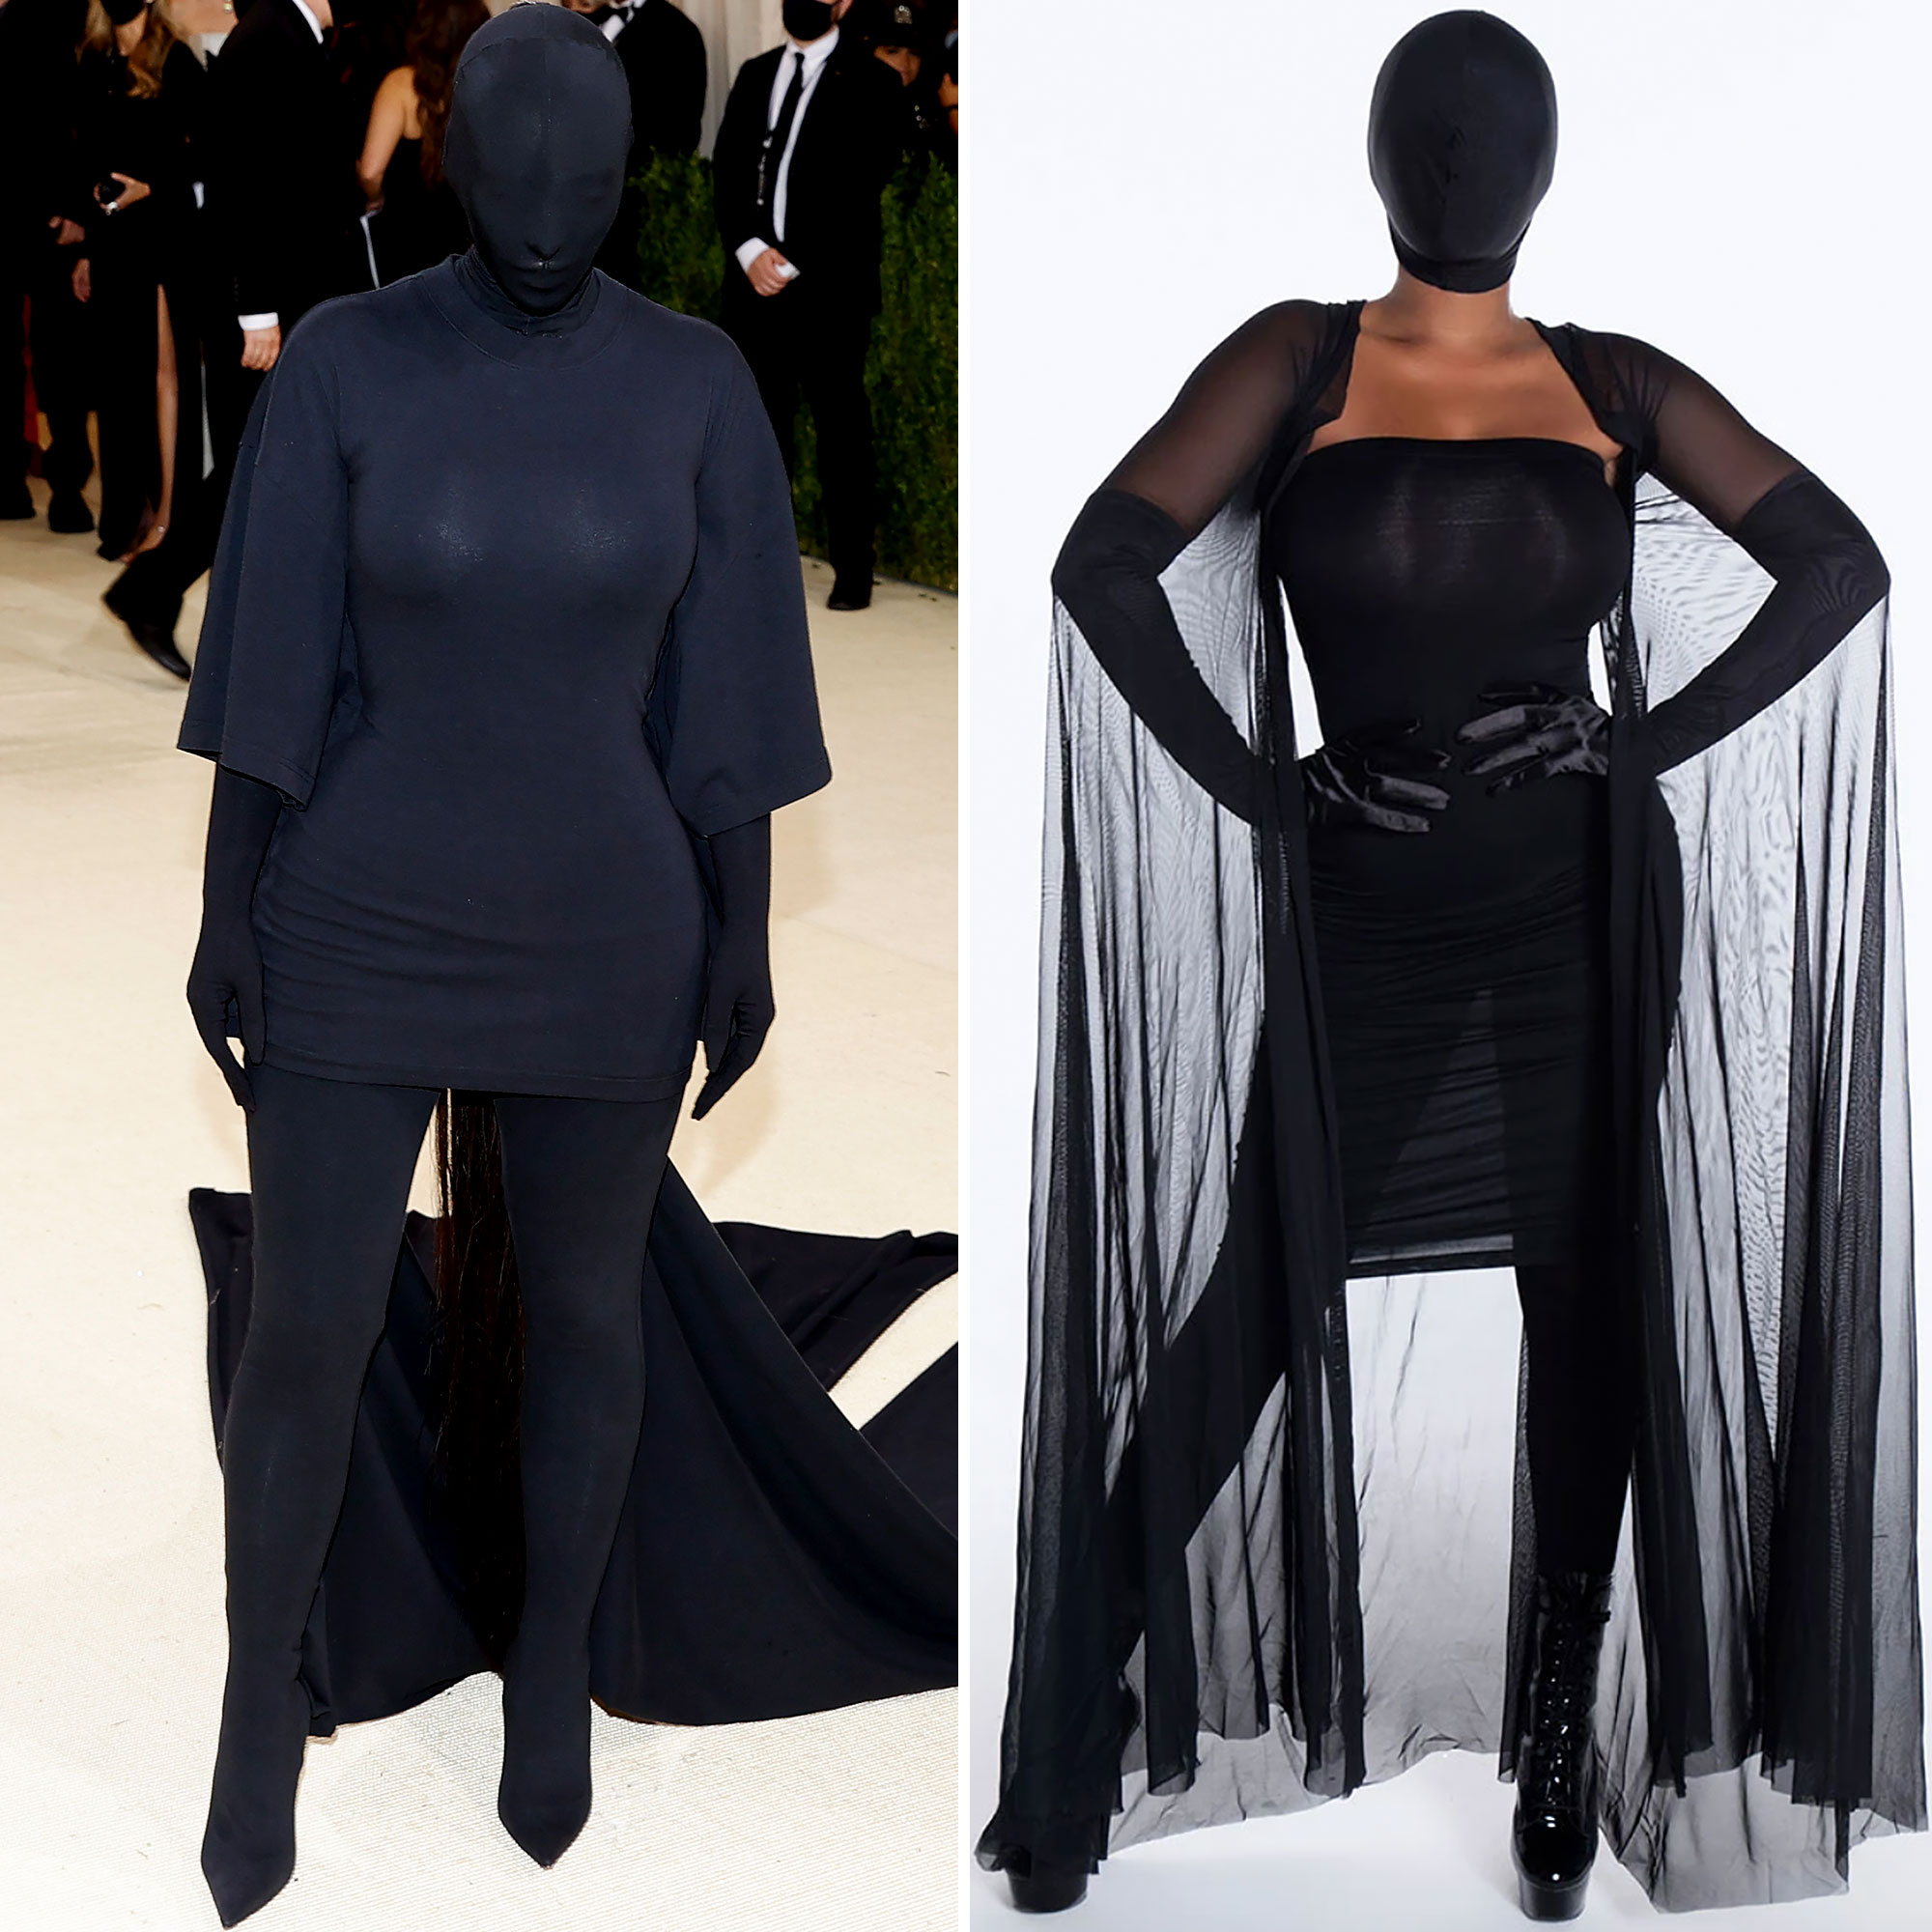 Kim Kardashian wears full black body suit to last night's Met Gala